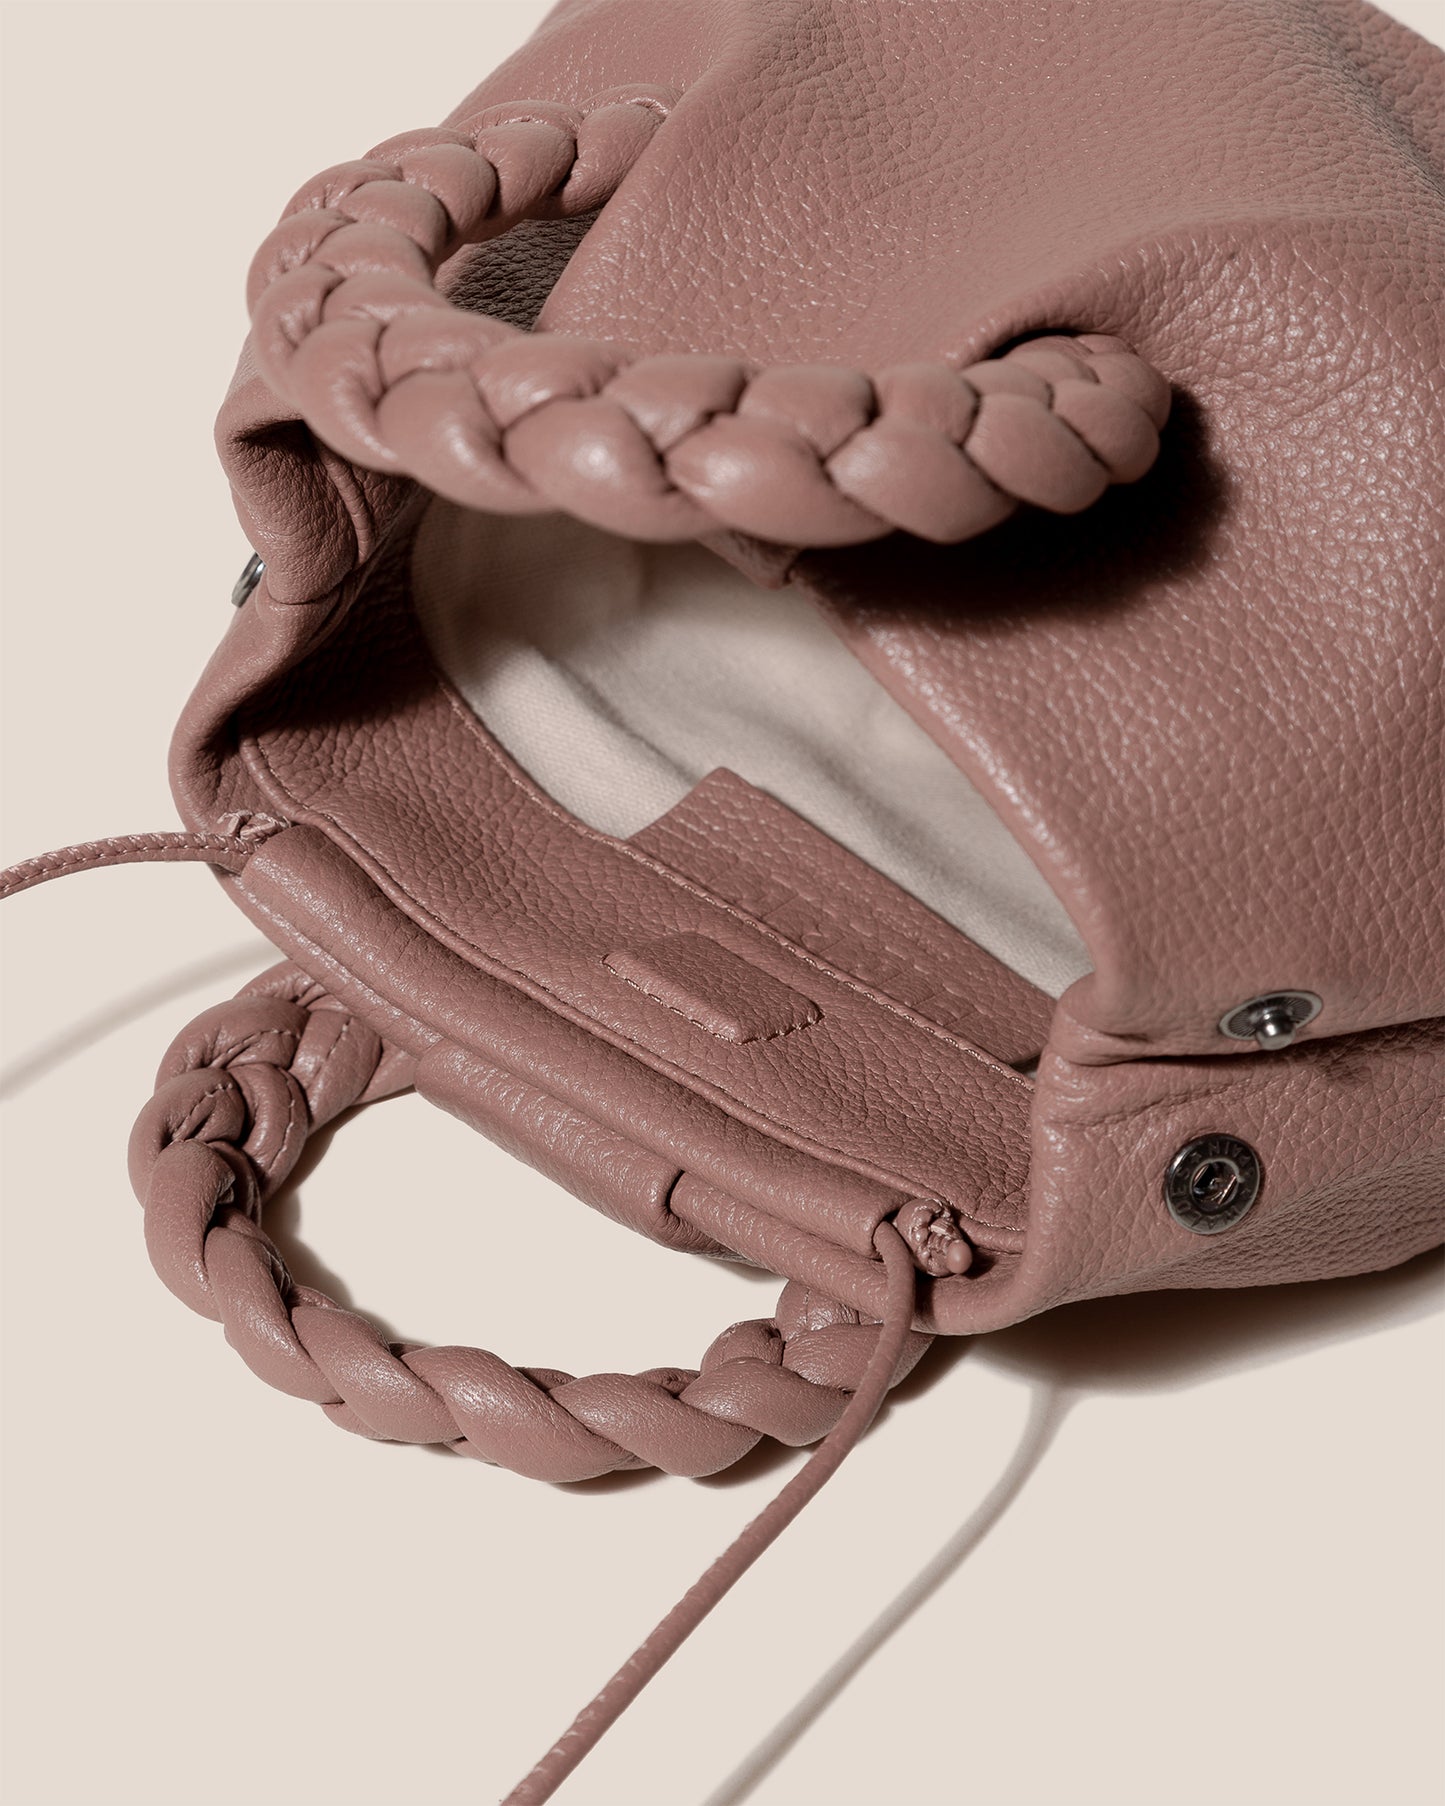 BOMBON GRAINY - Small Plaited-handle Leather Crossbody Bag